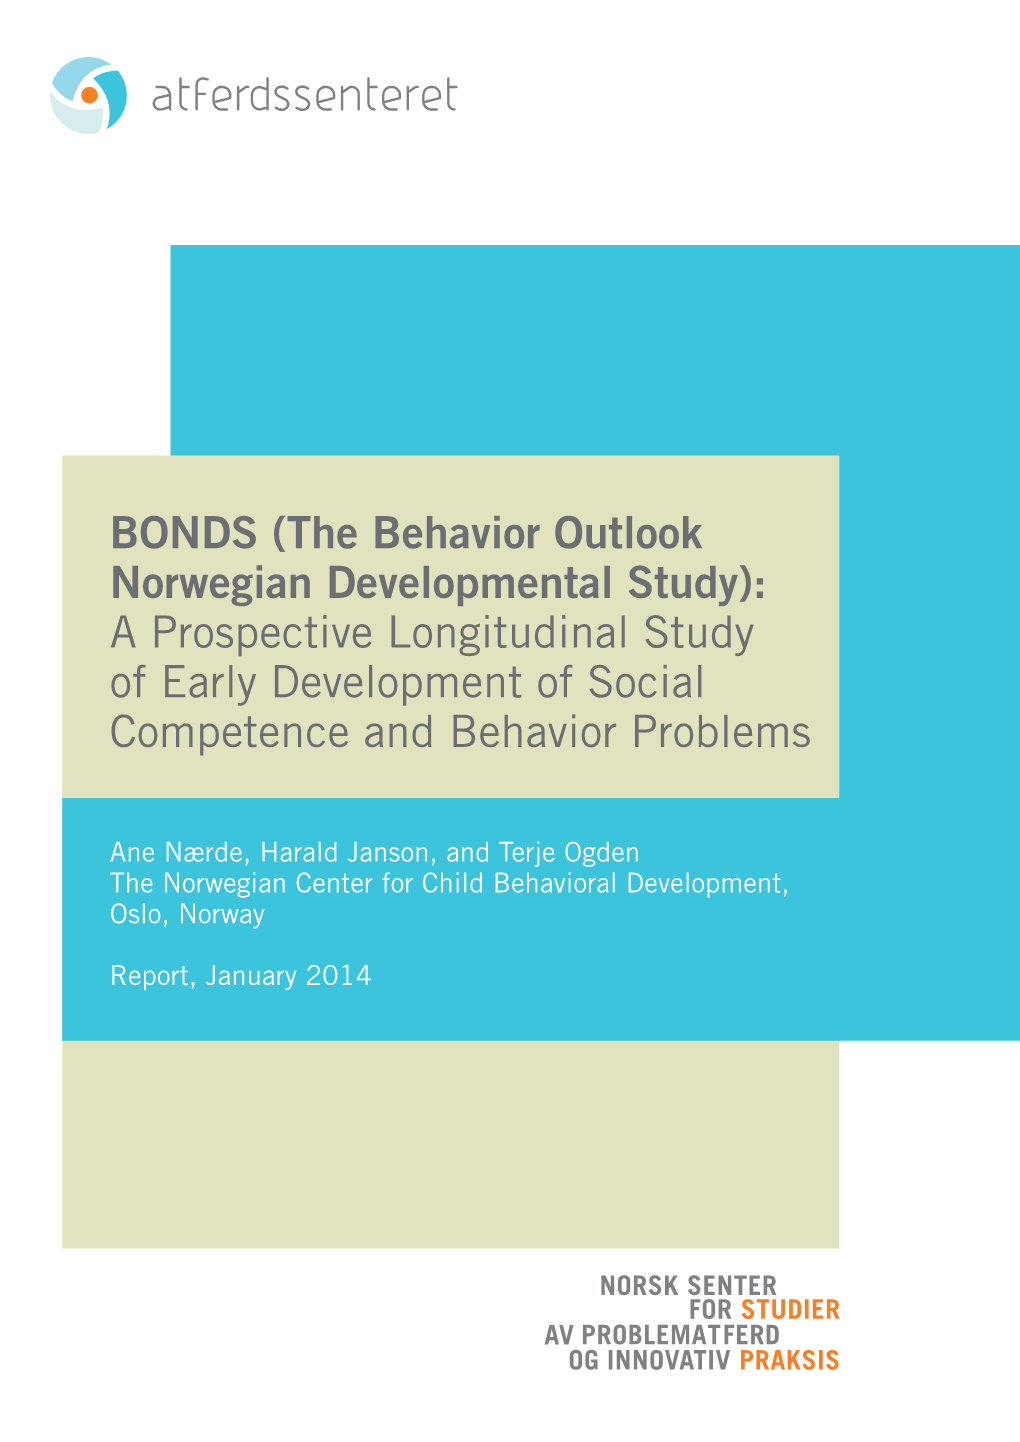 BONDS (The Behavior Outlook Norwegian Developmental Study): a Prospective Longitudinal Study of Early Development of Social Competence and Behavior Problems